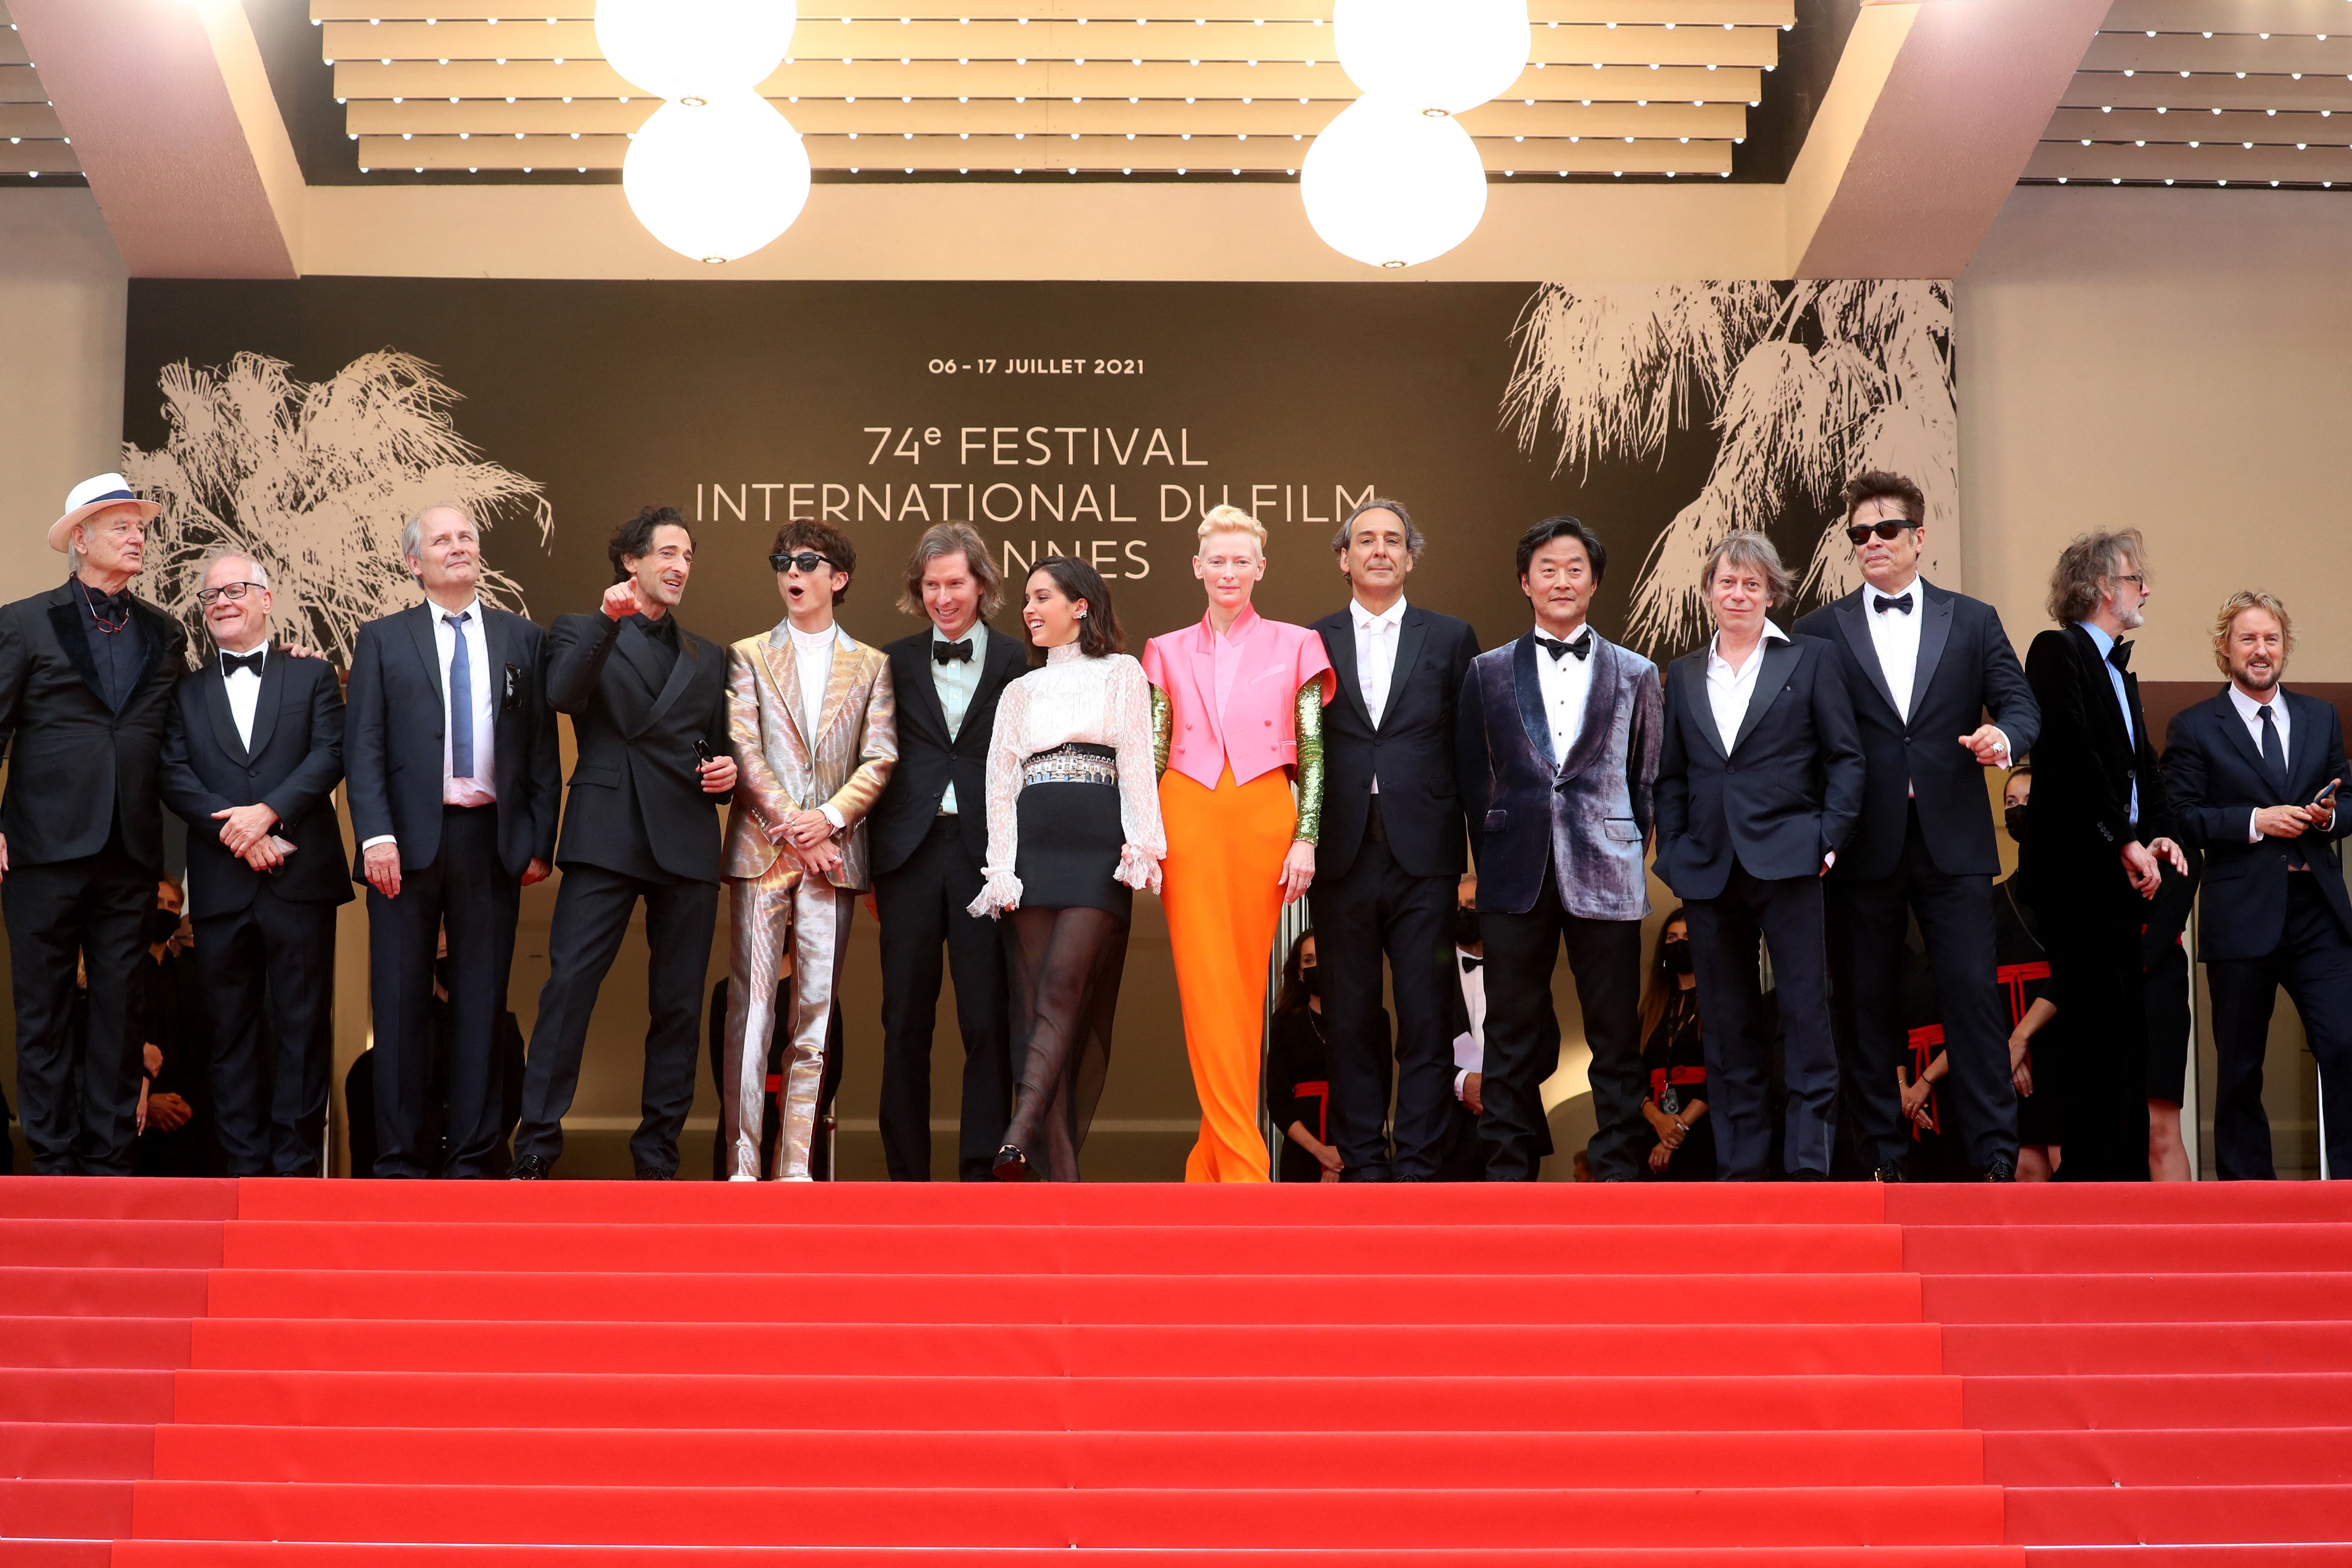 Timothée Chalamet Wears Silver Tom Ford at Cannes Film Festival